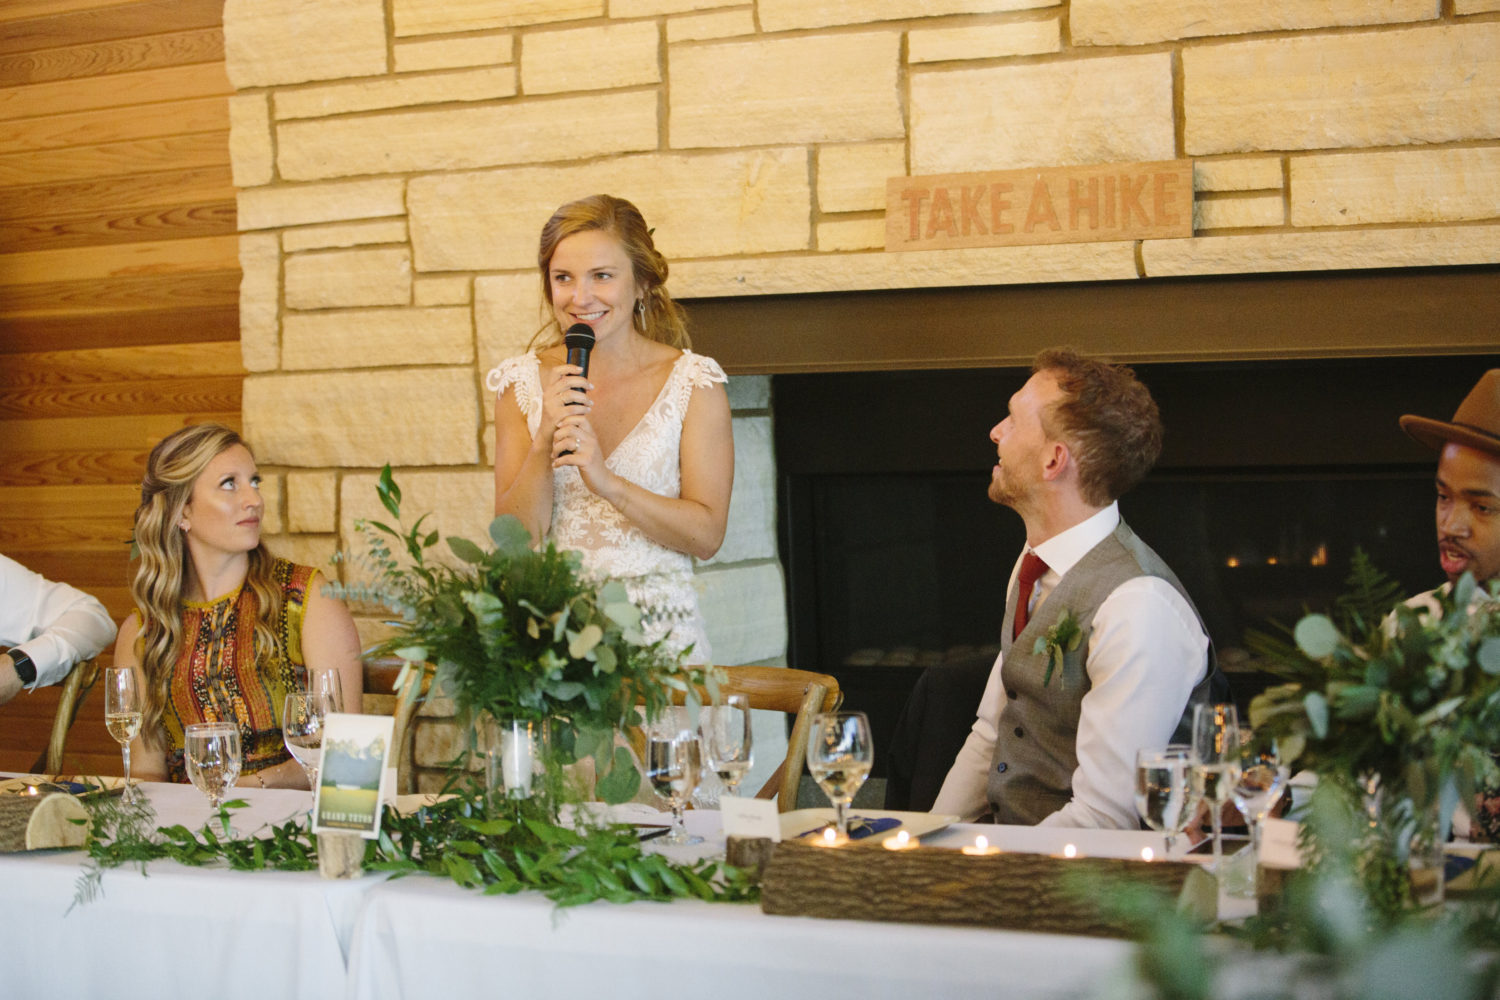 Bride toast speech at Iowa wedding reception 